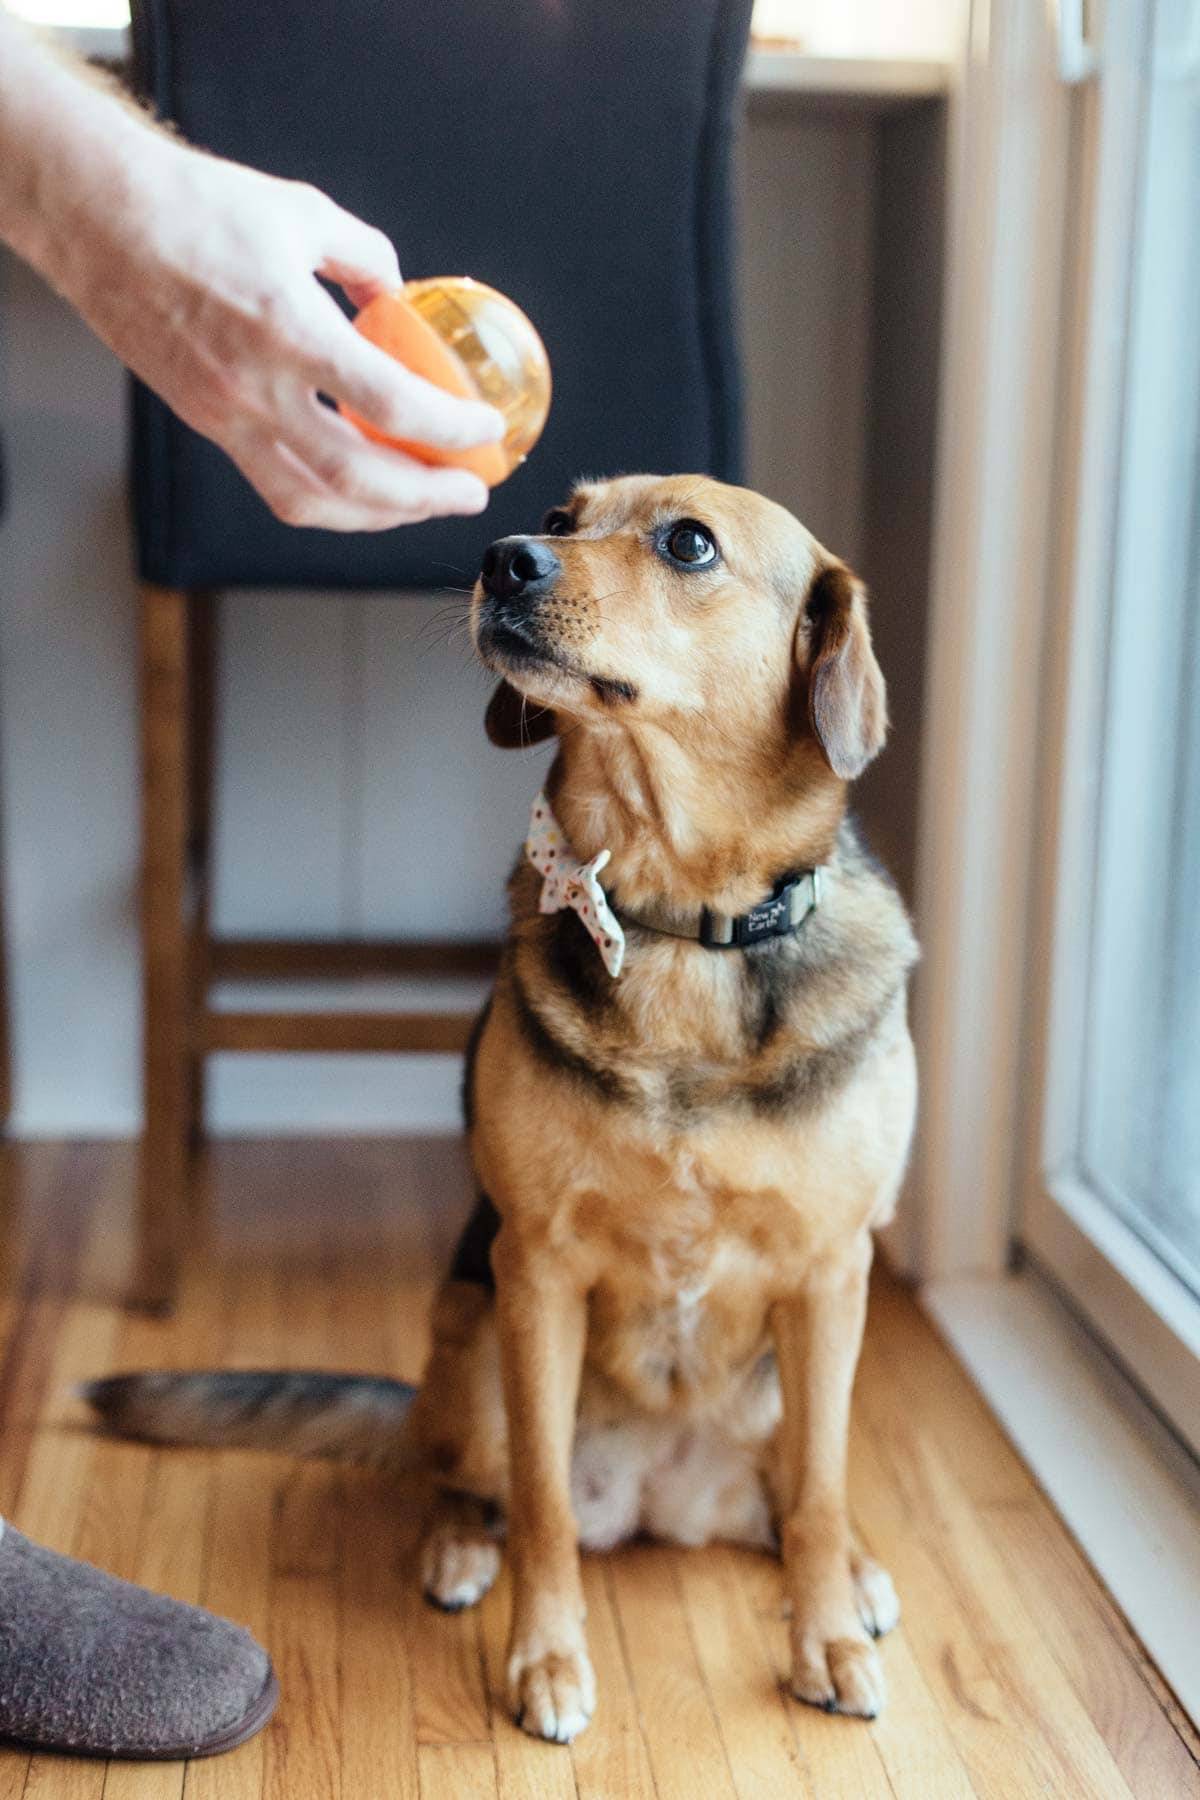 Dog looking at an orange ball.